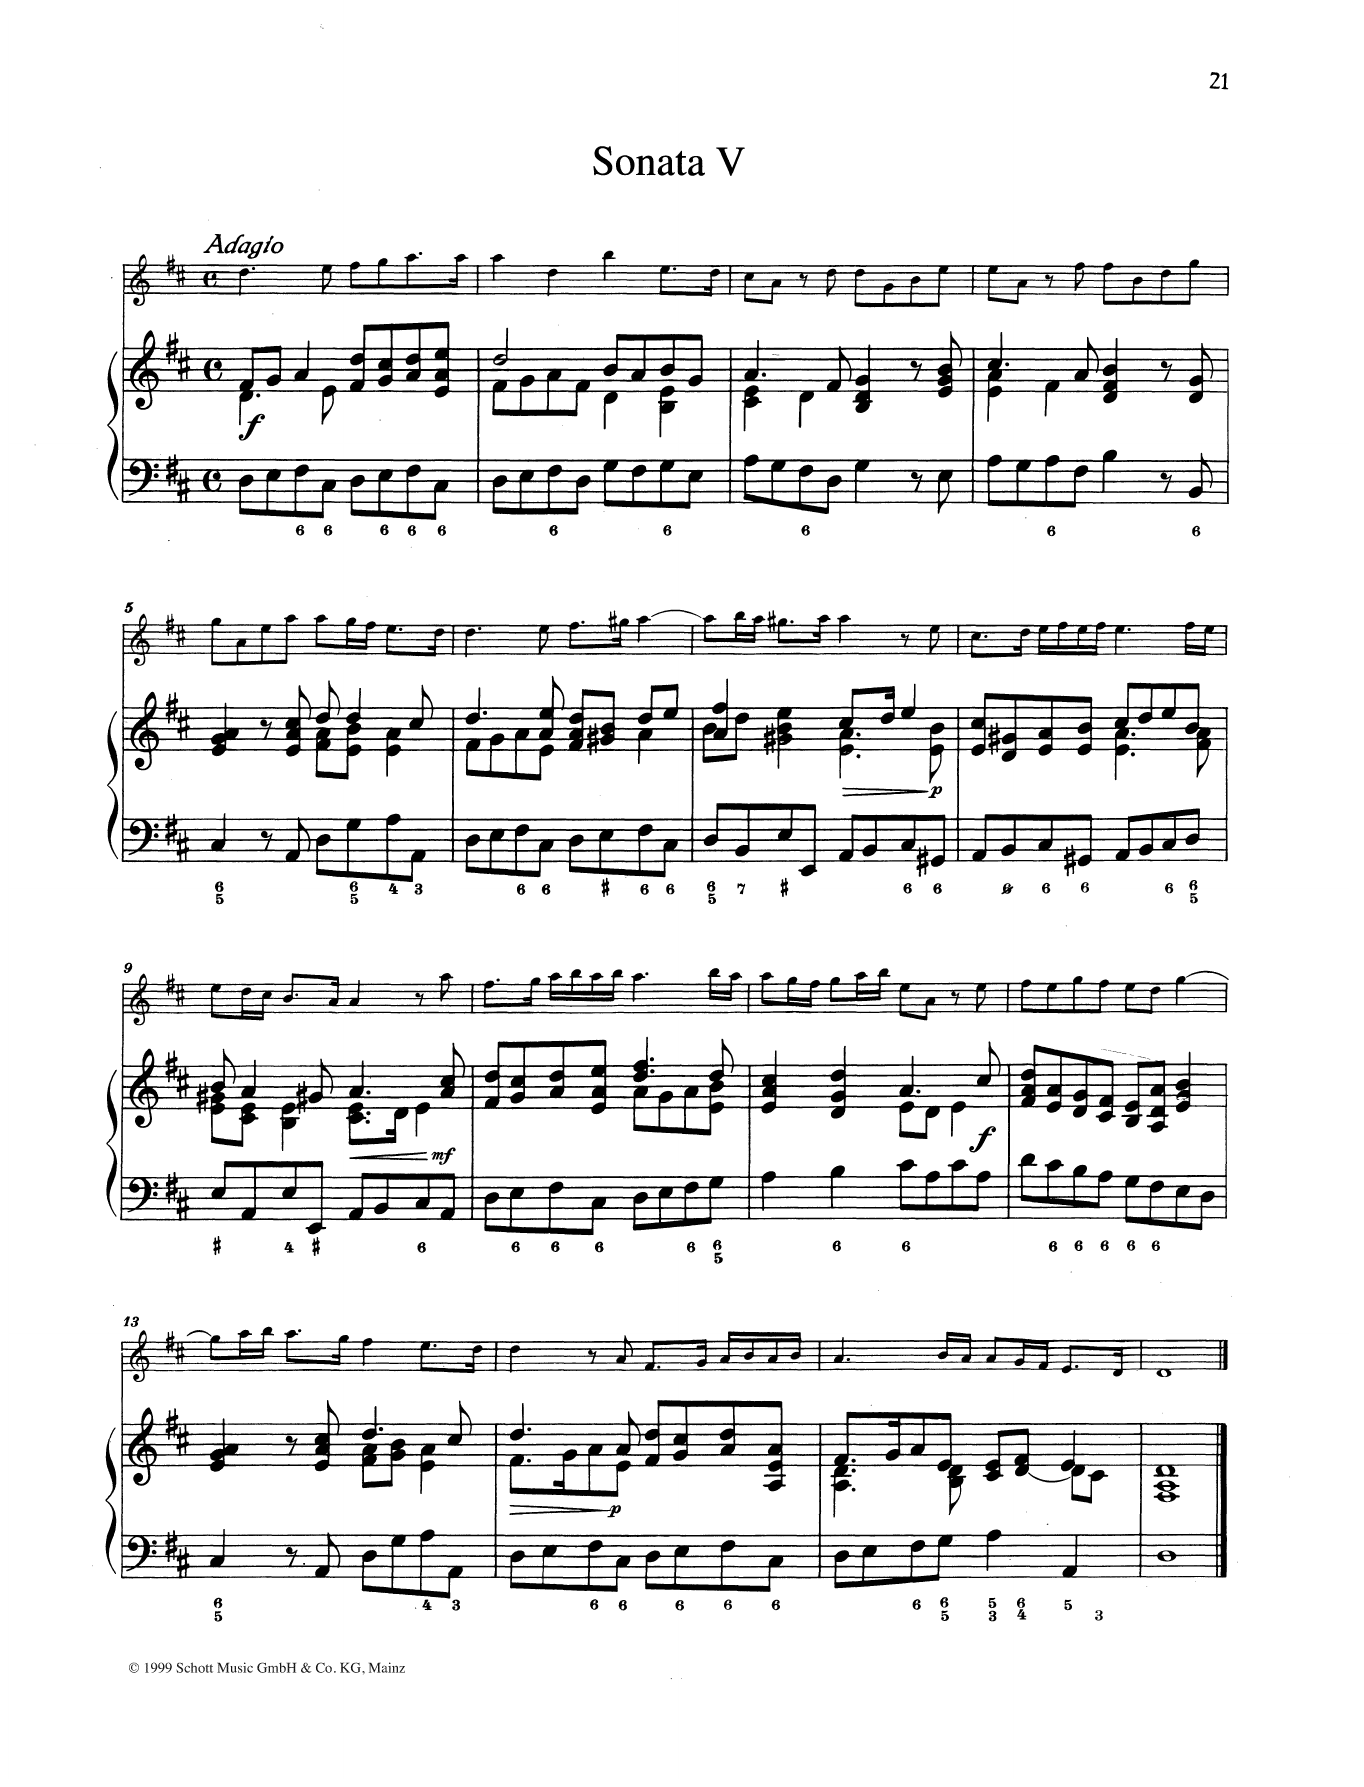 Baldassare Galuppi Sonata No. 5 Sheet Music Notes & Chords for String Solo - Download or Print PDF